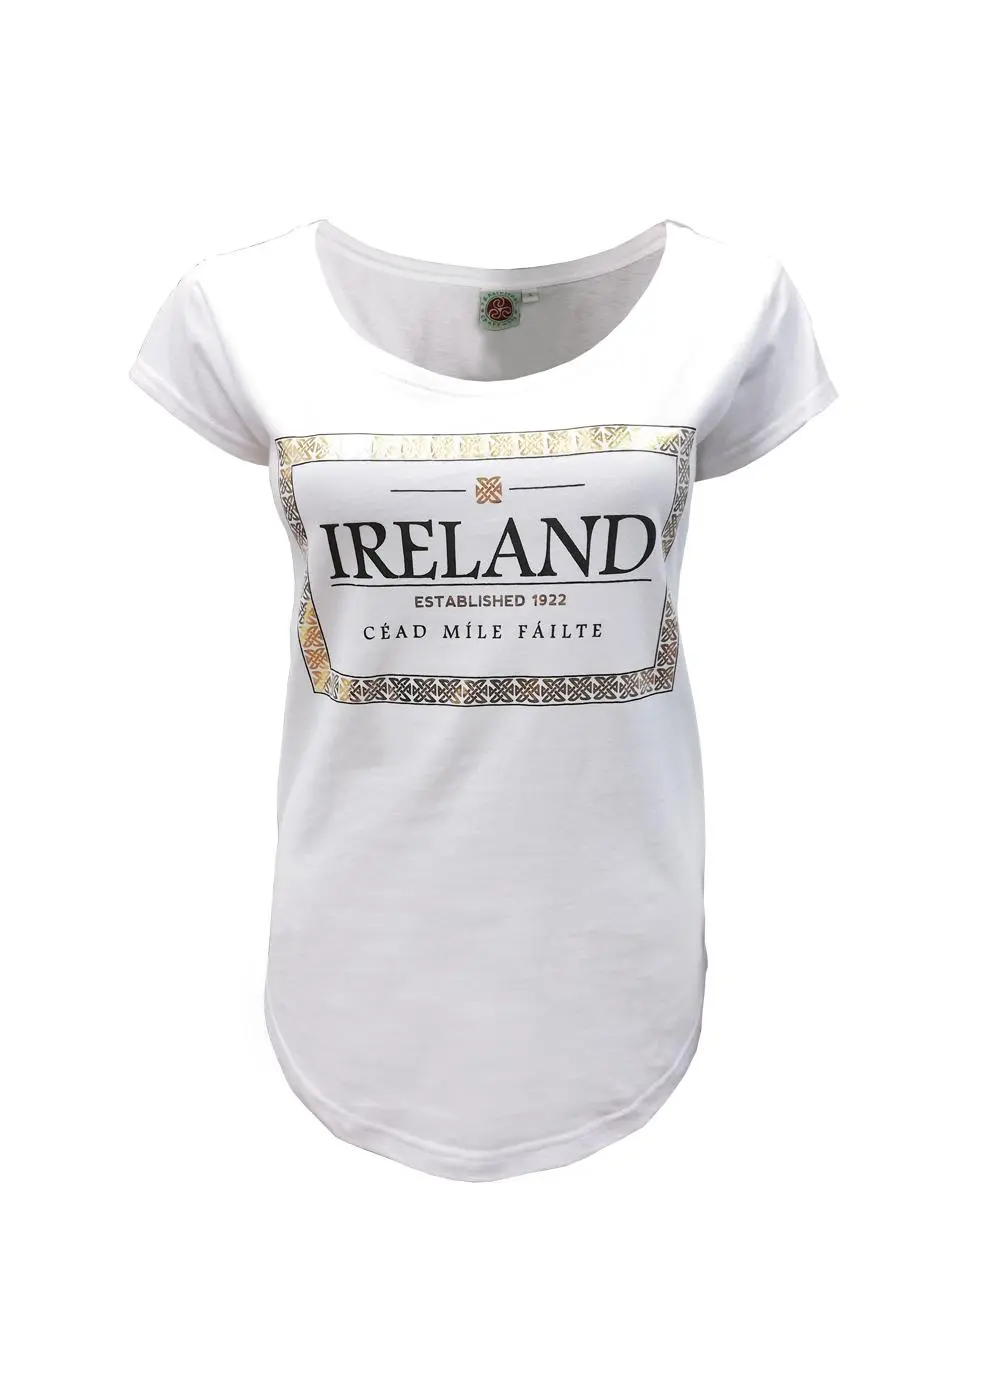 Ireland Cead Mile Failte T-Shirt